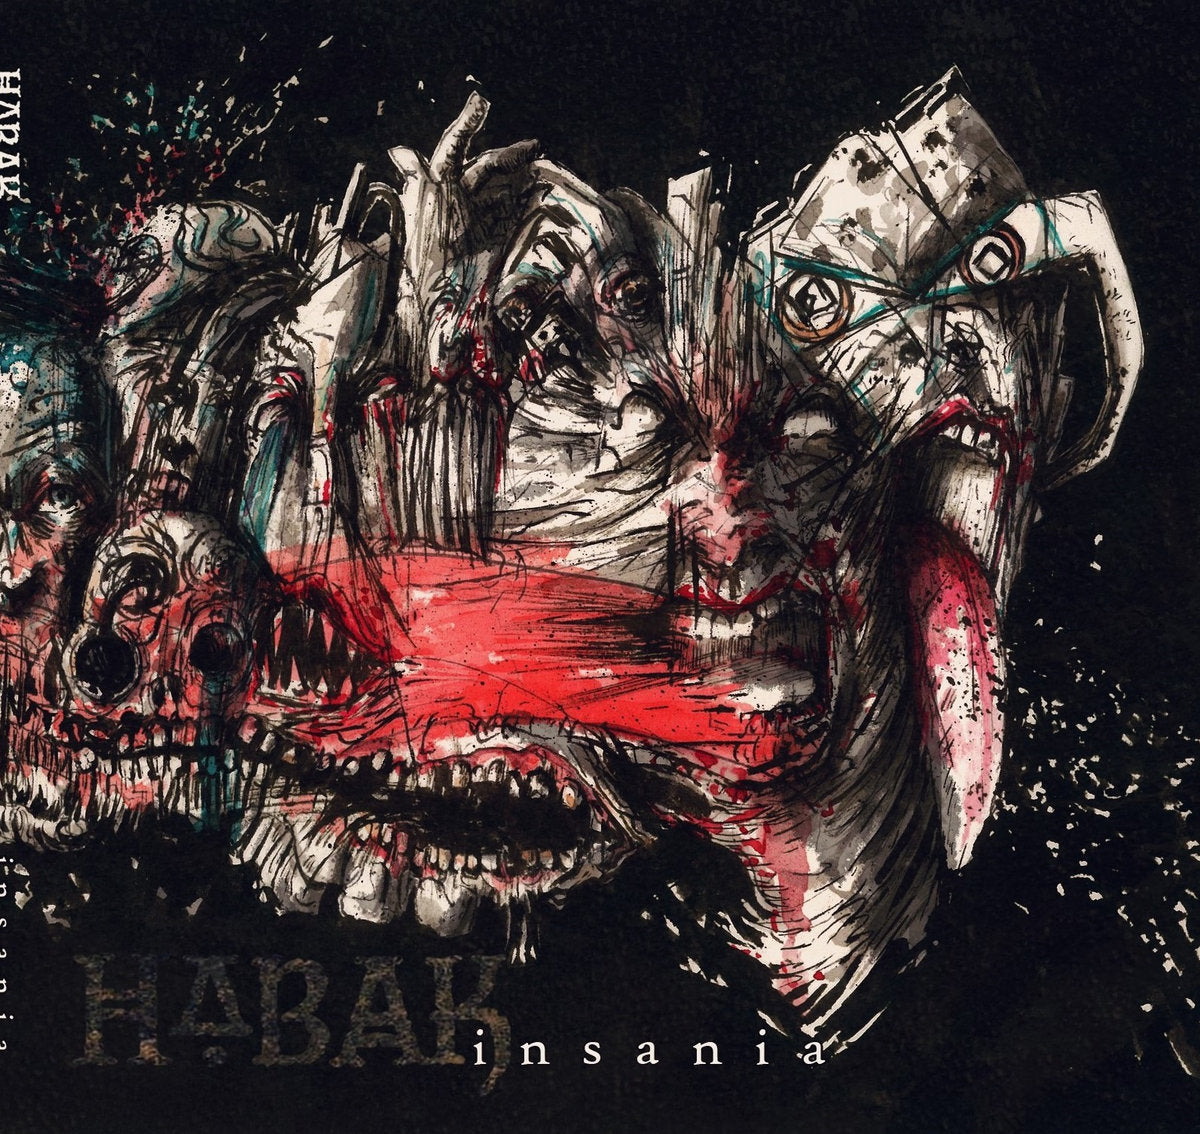 Habak "Insania" LP